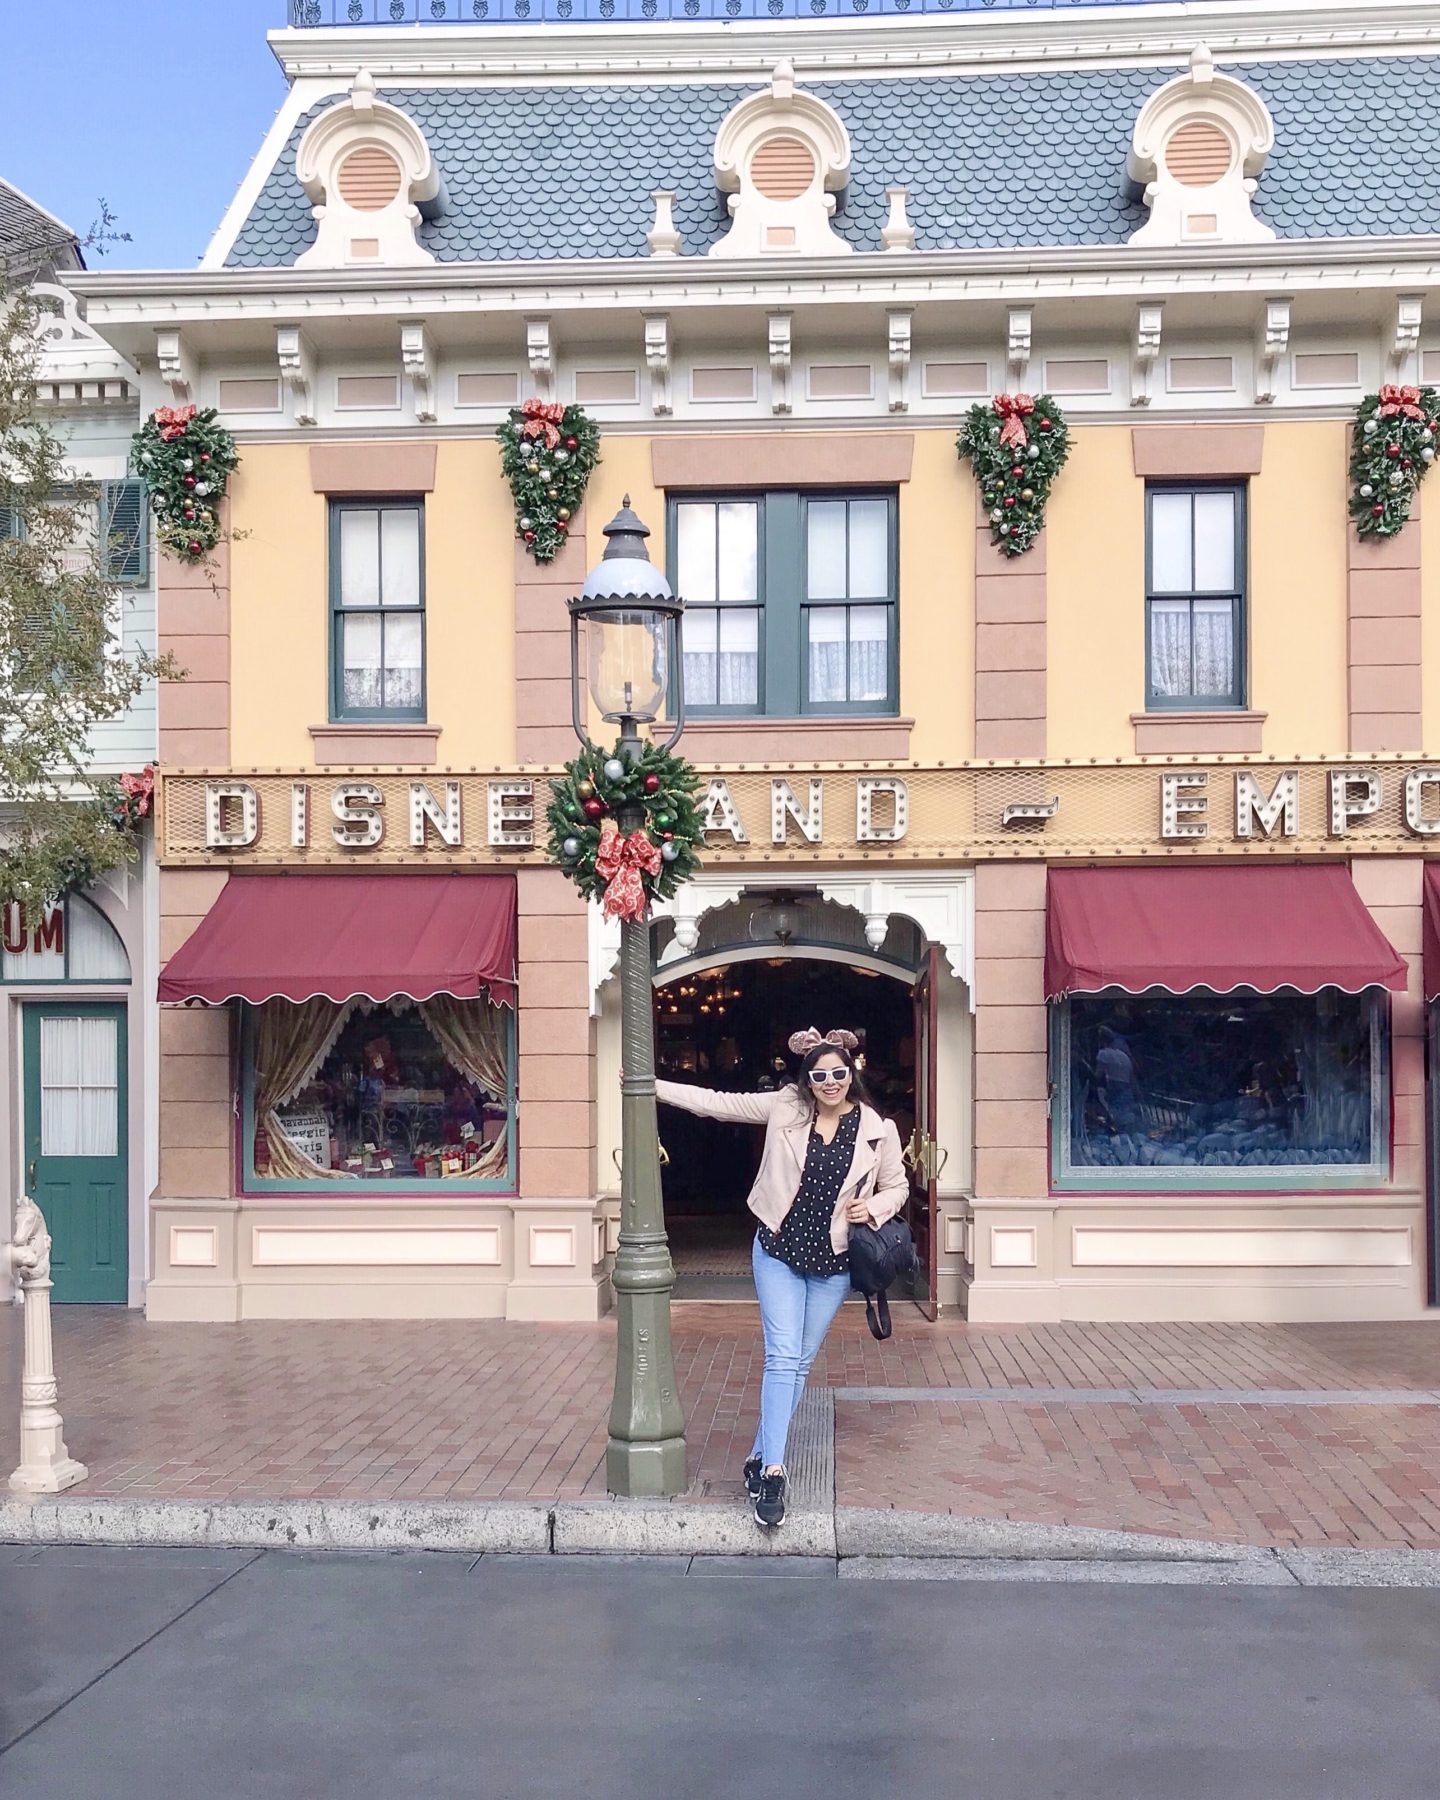 Disneyland during the Holidays, Mainstreet USA during the Holidays